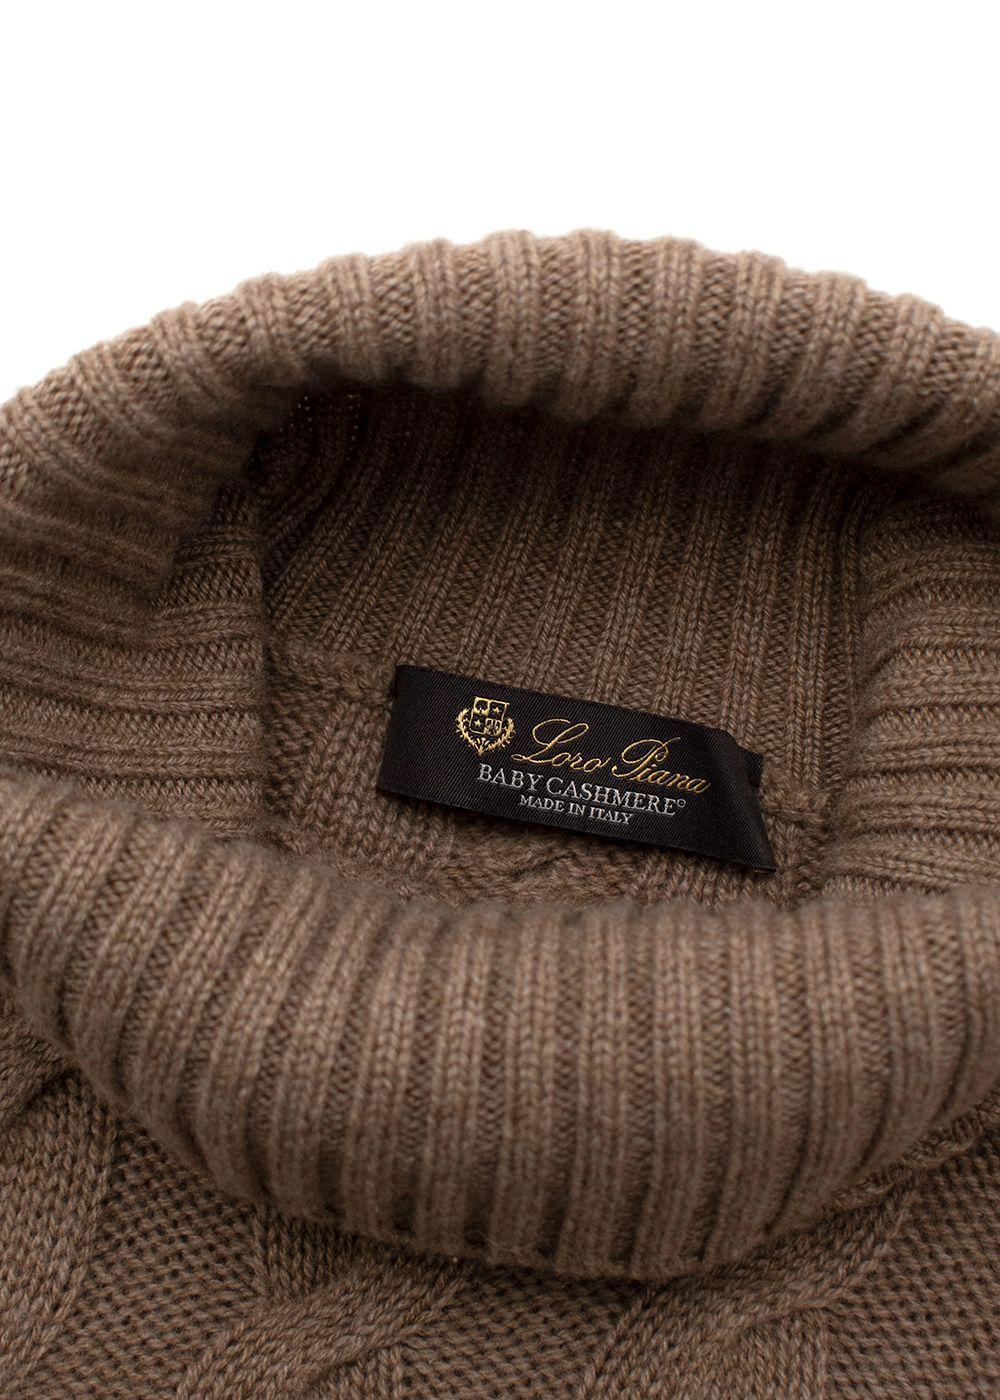 light brown knit sweater